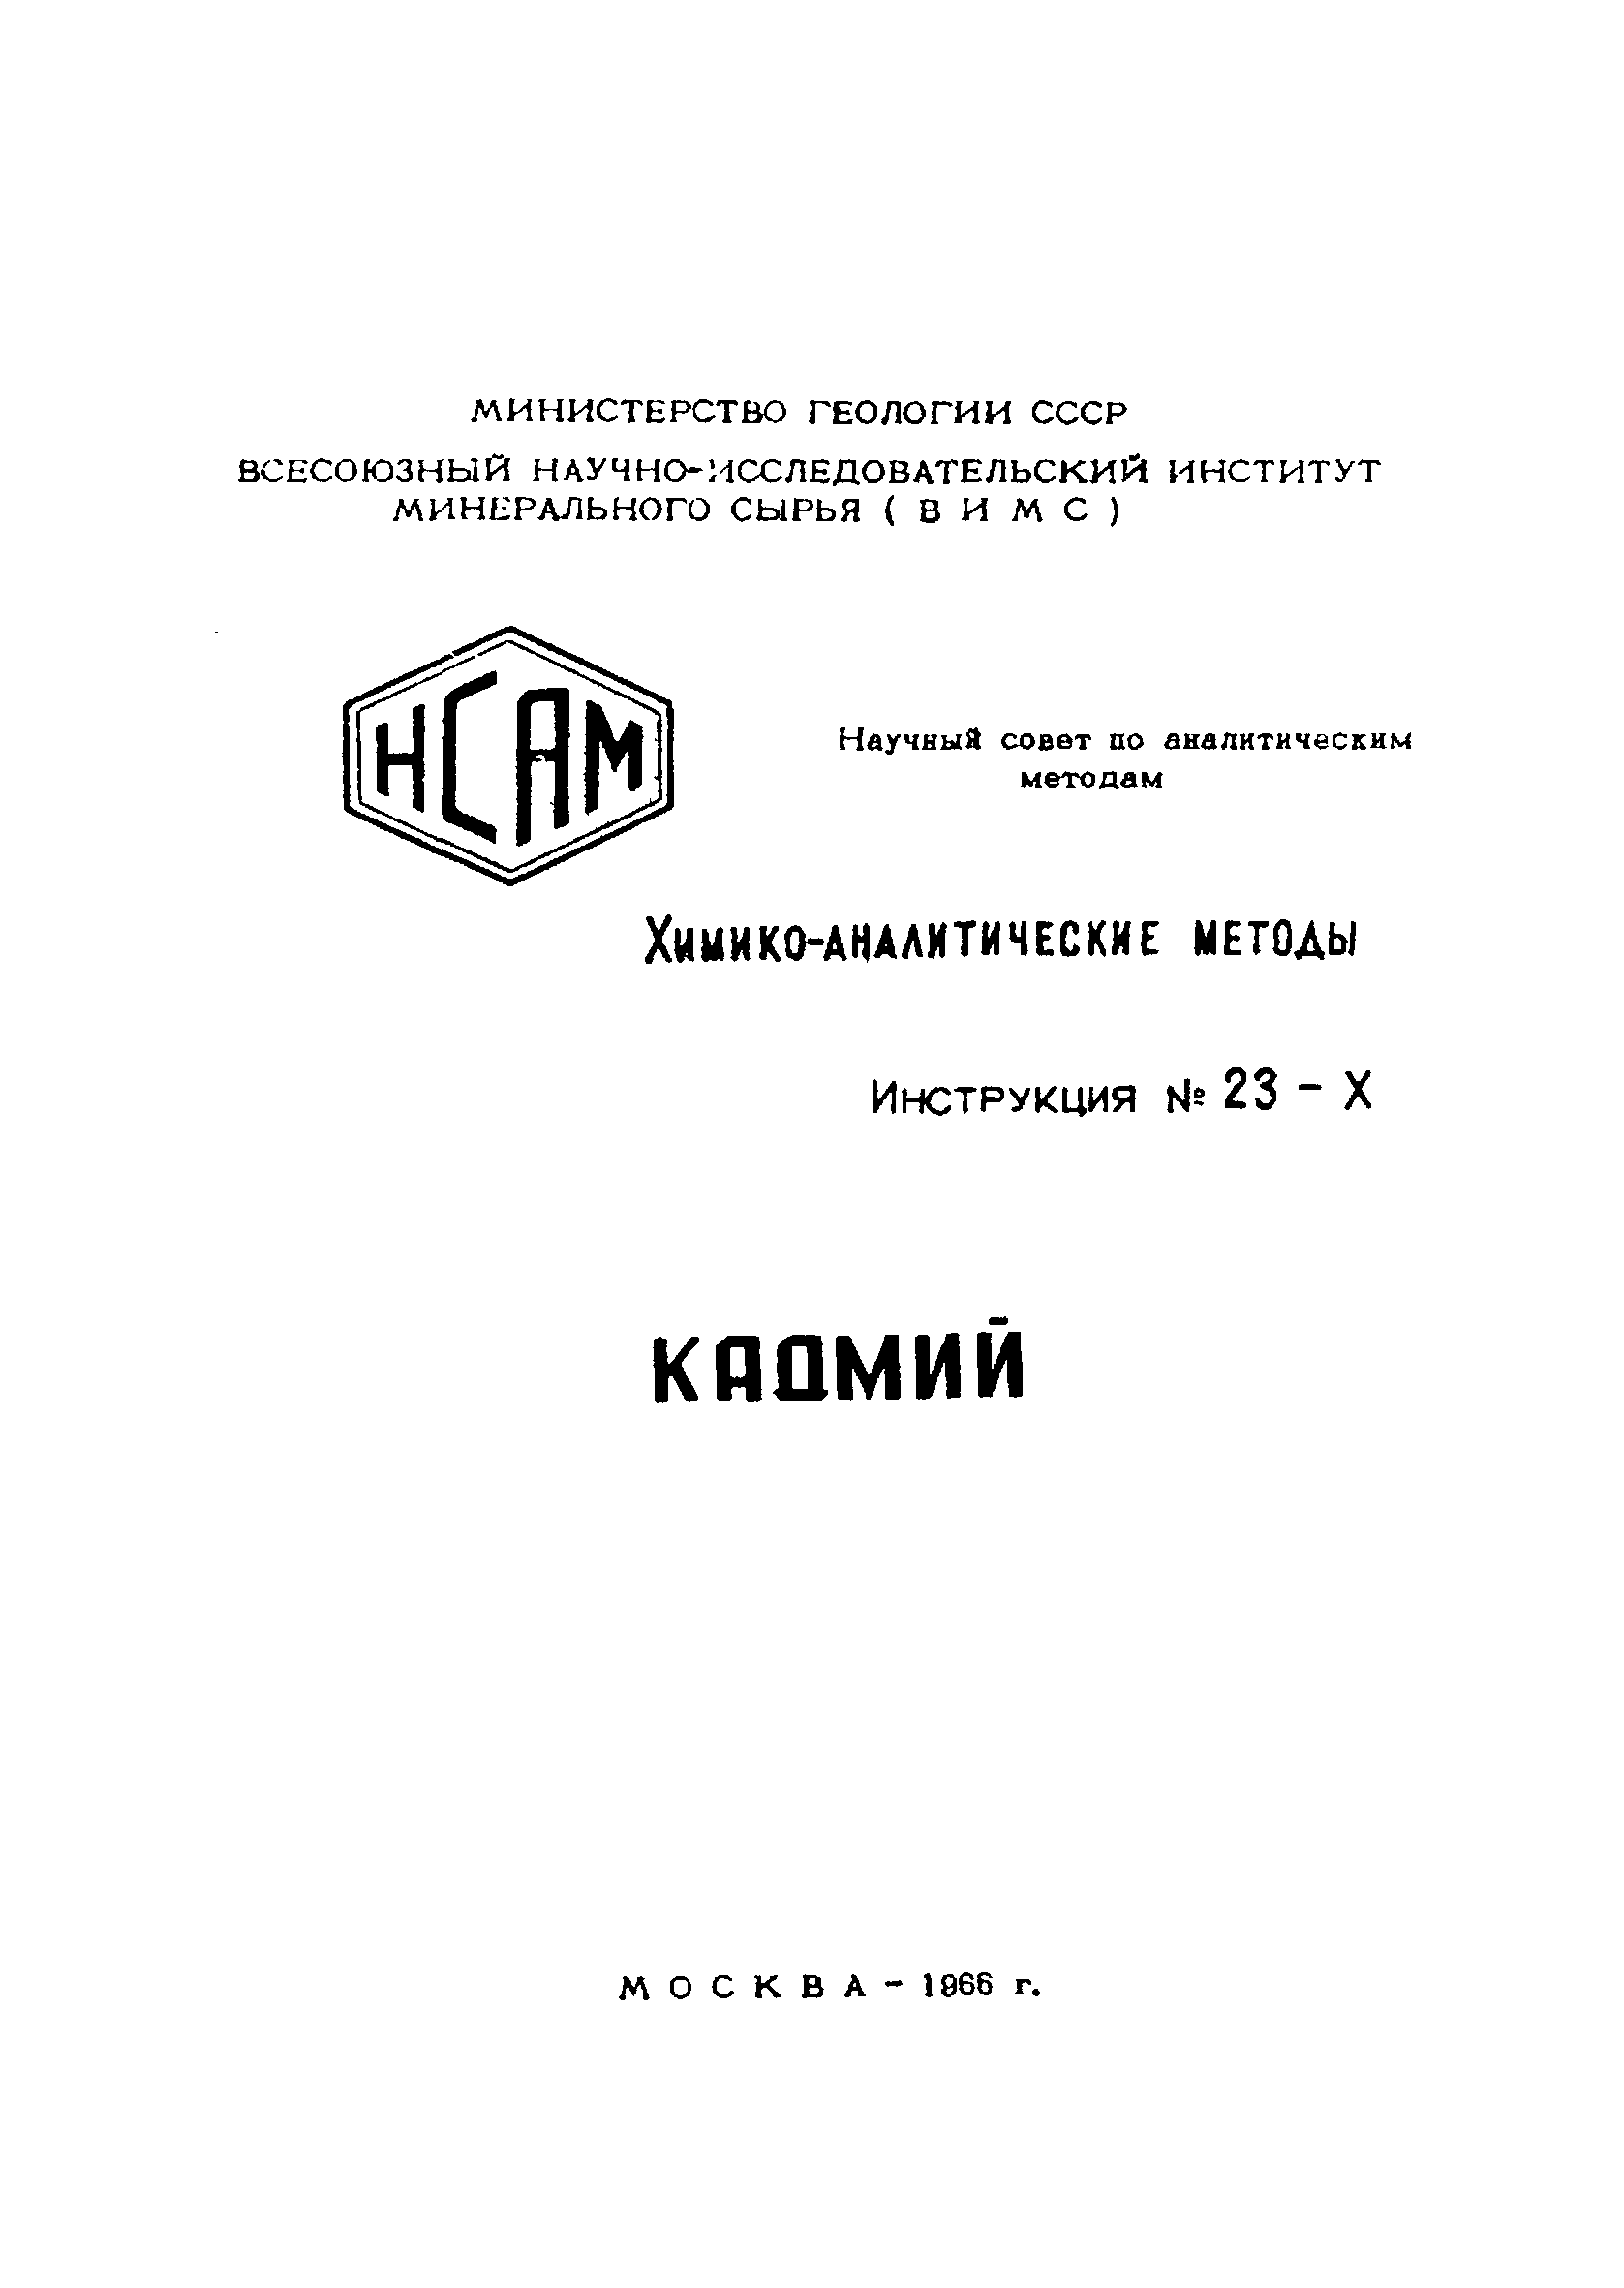 Инструкция НСАМ 23-Х